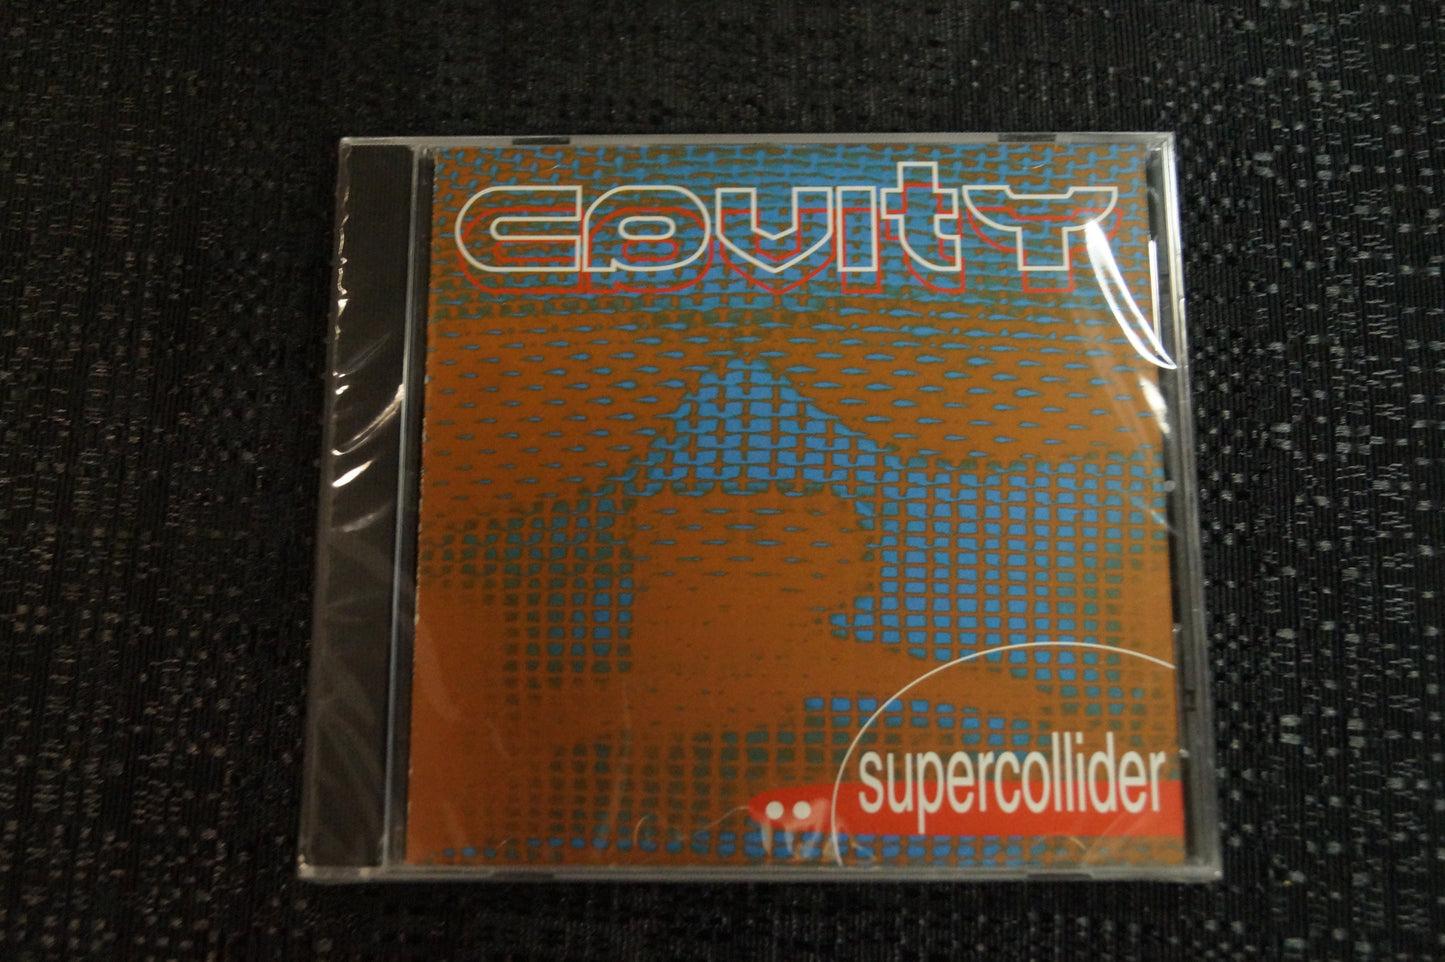 Cavity "Supercollider" 1999 CD Art By Kozik